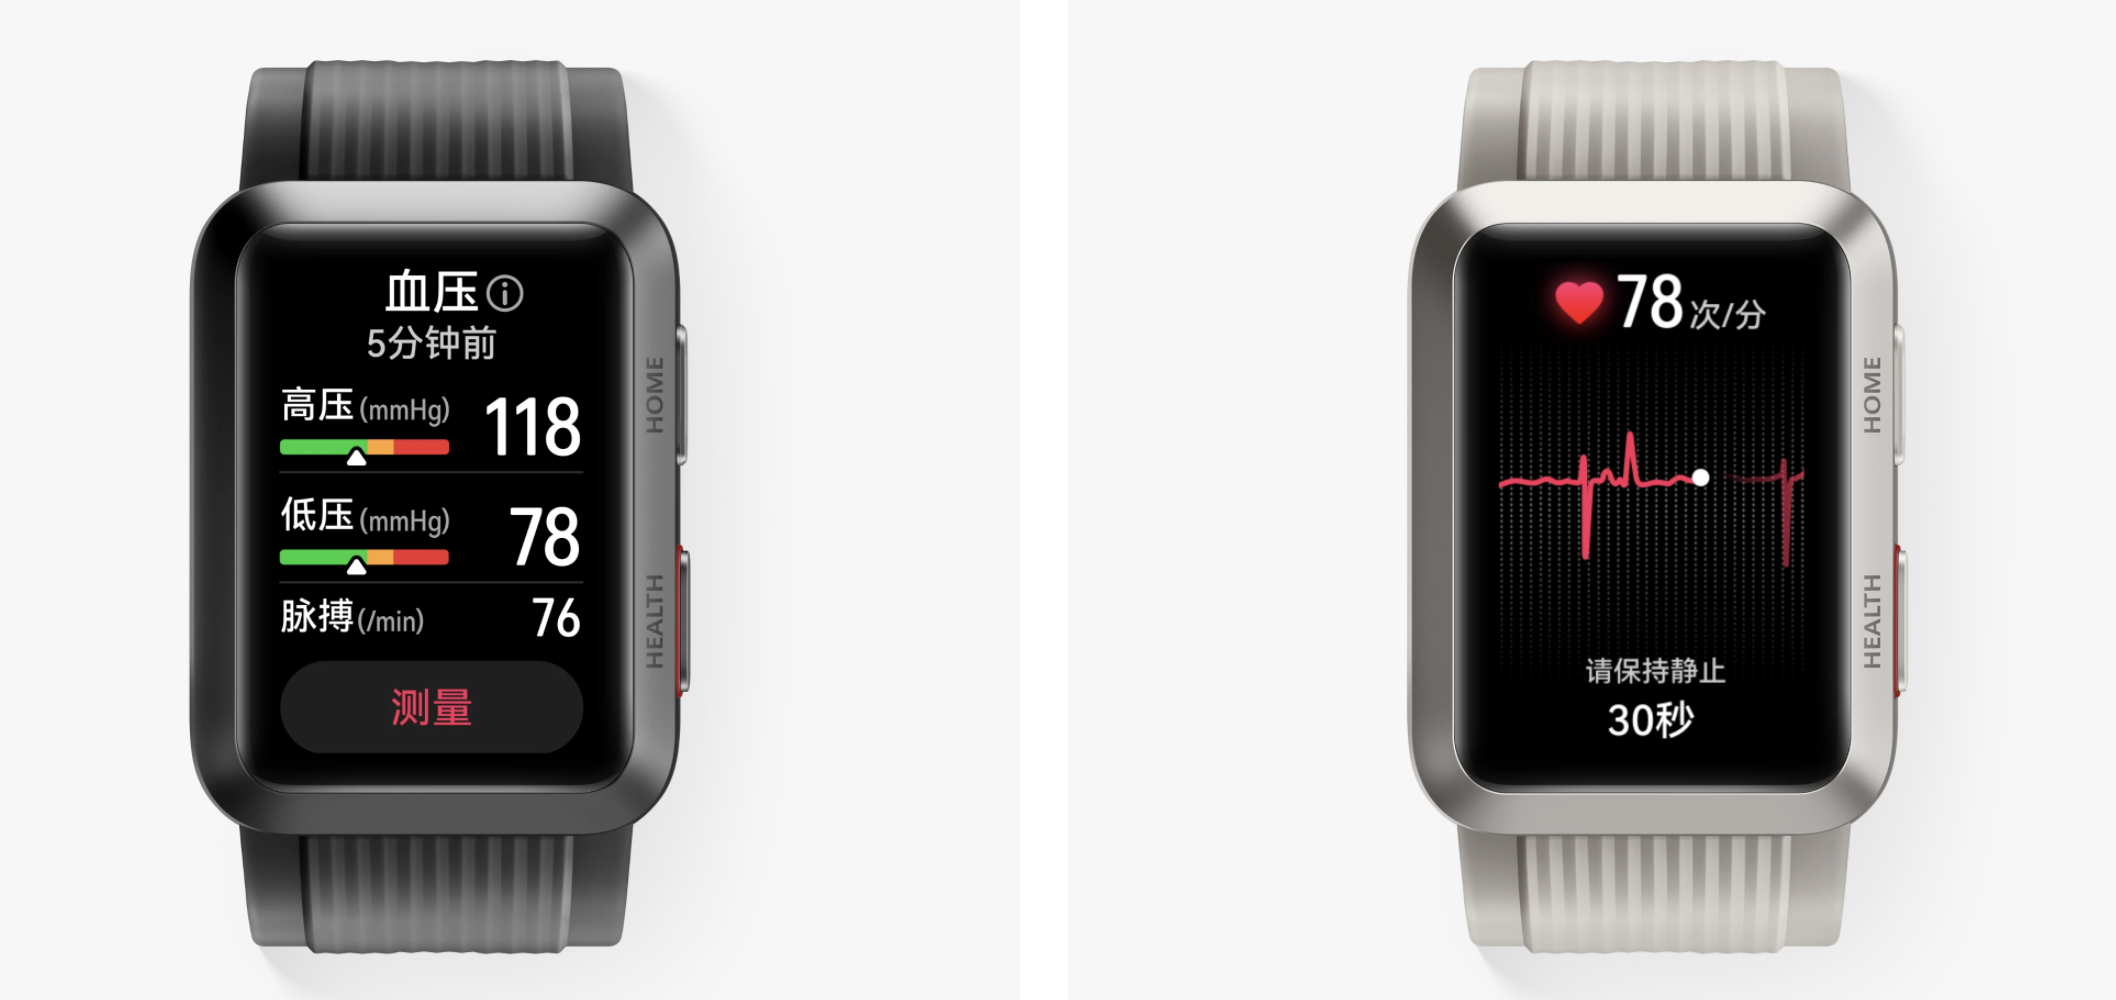 Huawei watch fit давление. Смарт часы Хуавей watch d. Хуавей часы давление. Смарт часы с измерением давления Huawei. Смарт часы с функцией ЭКГ 2021.